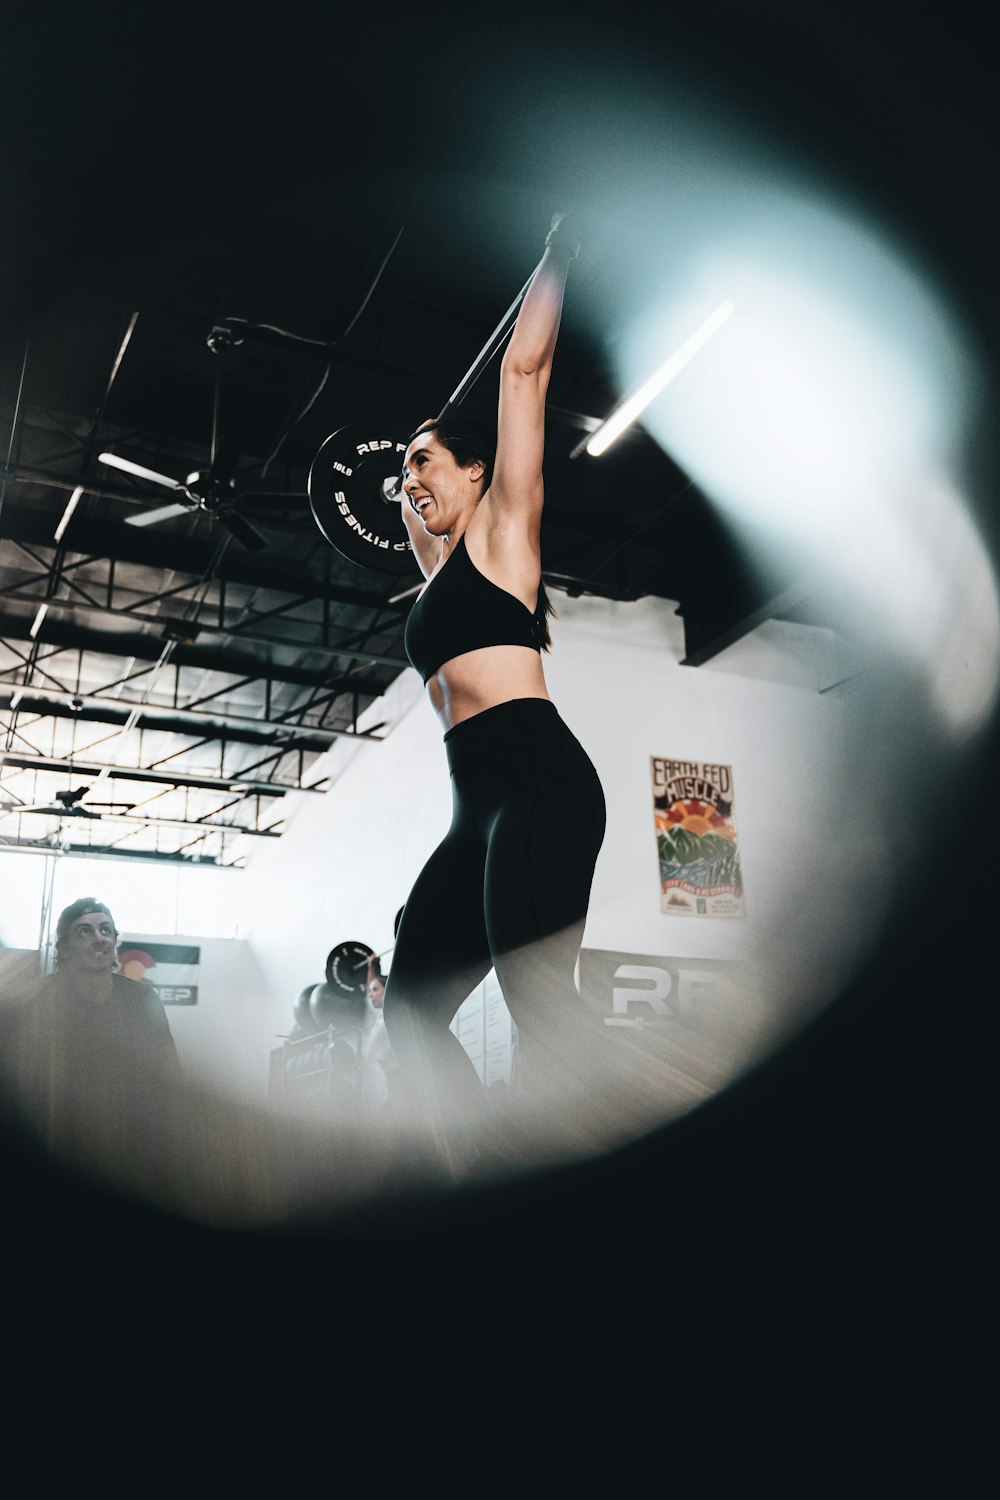 woman in black sports bra and black leggings doing yoga